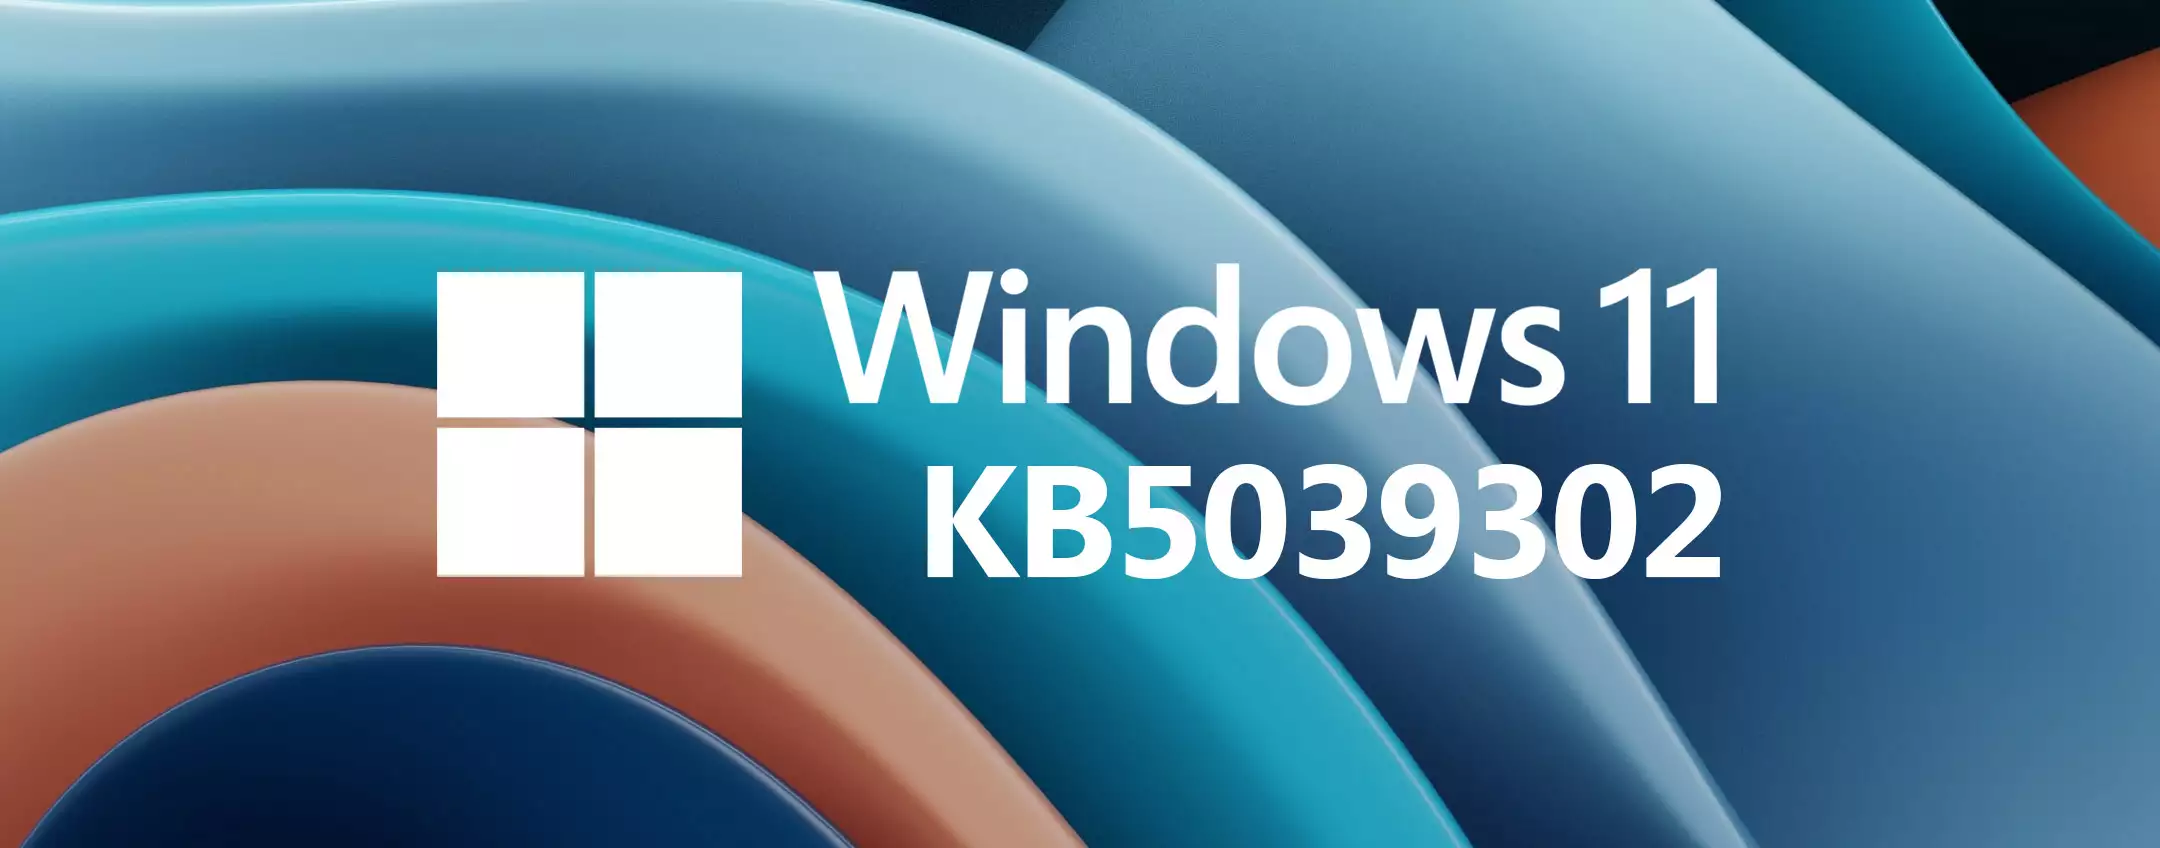 Windows 11 KB5039302: distribuzione sospesa